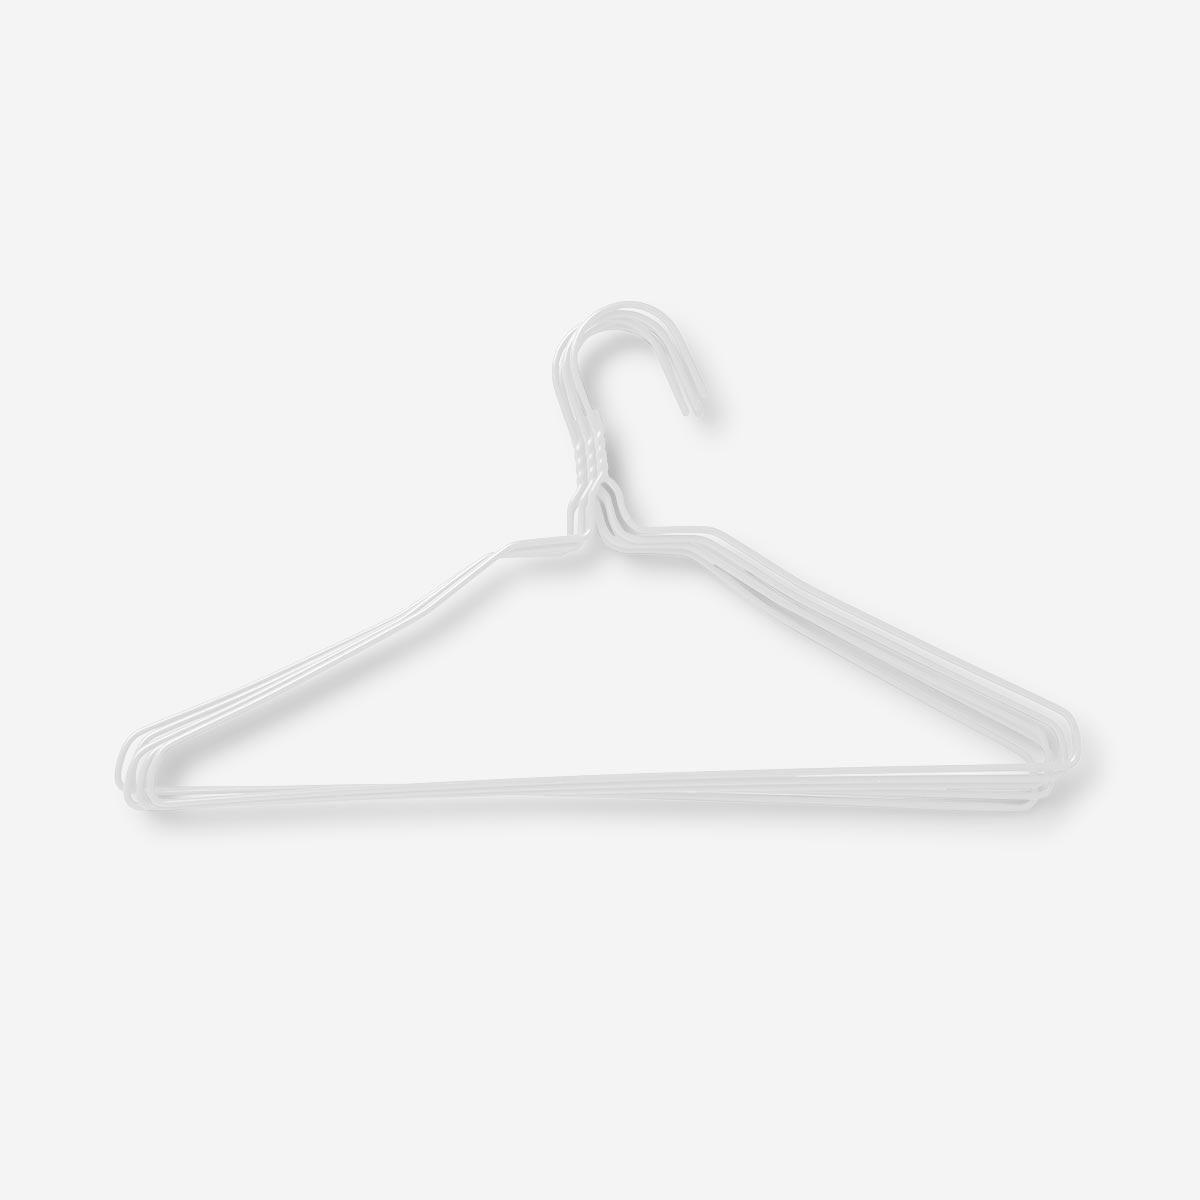 White metal hangers